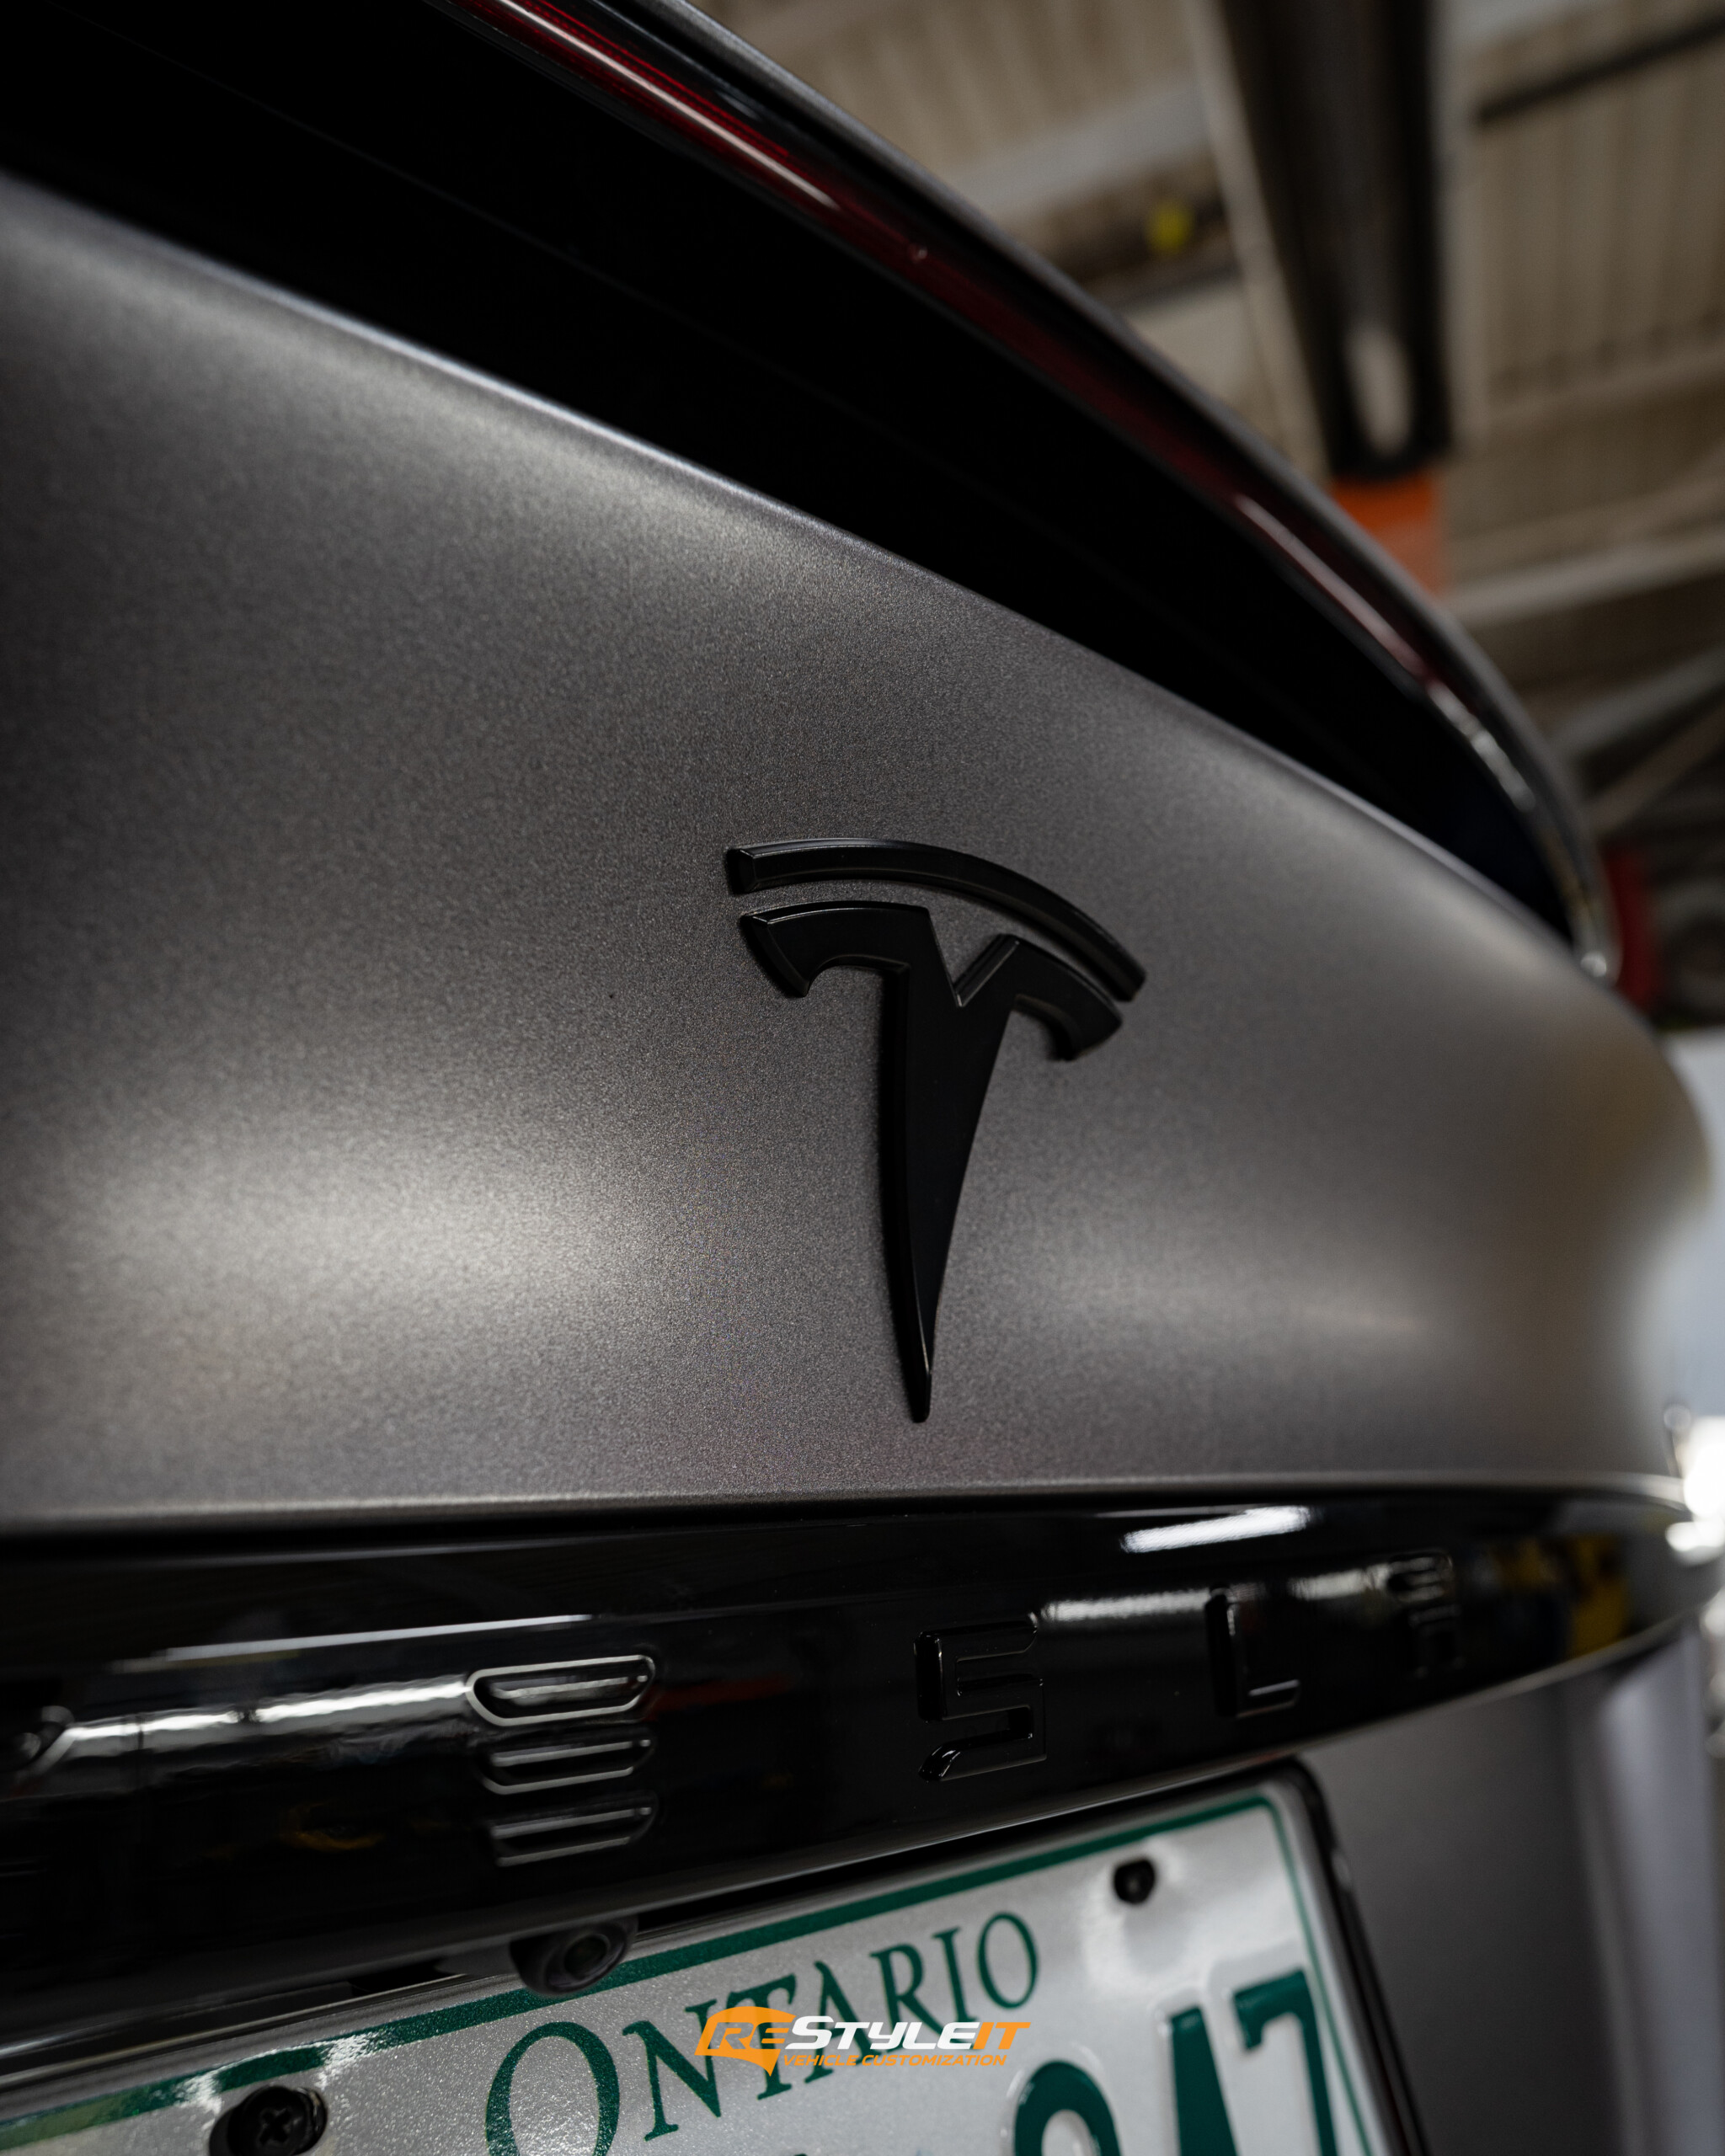 "Satin Dark Grey Transformation: Wrapping the Tesla Model X into a Flawless Jewel"